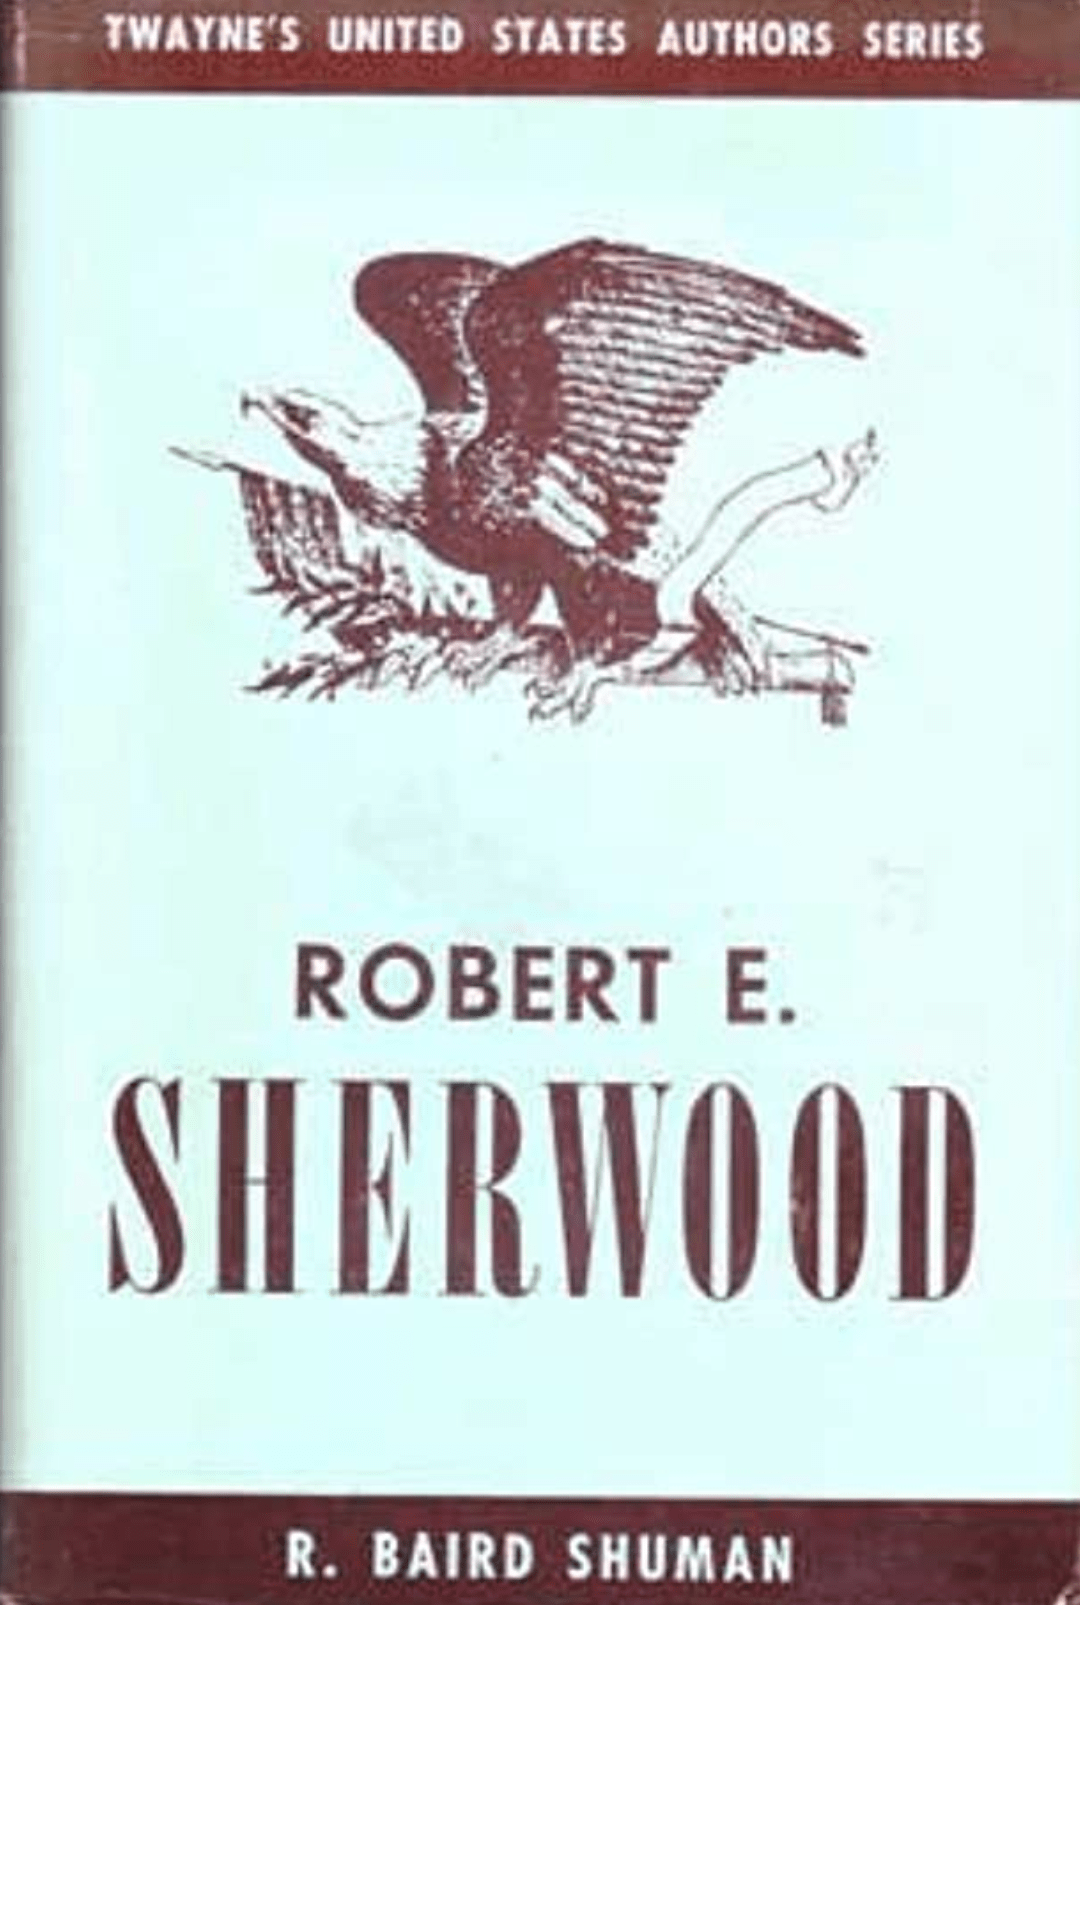 Robert E. Sherwood by R. Baird Shuman